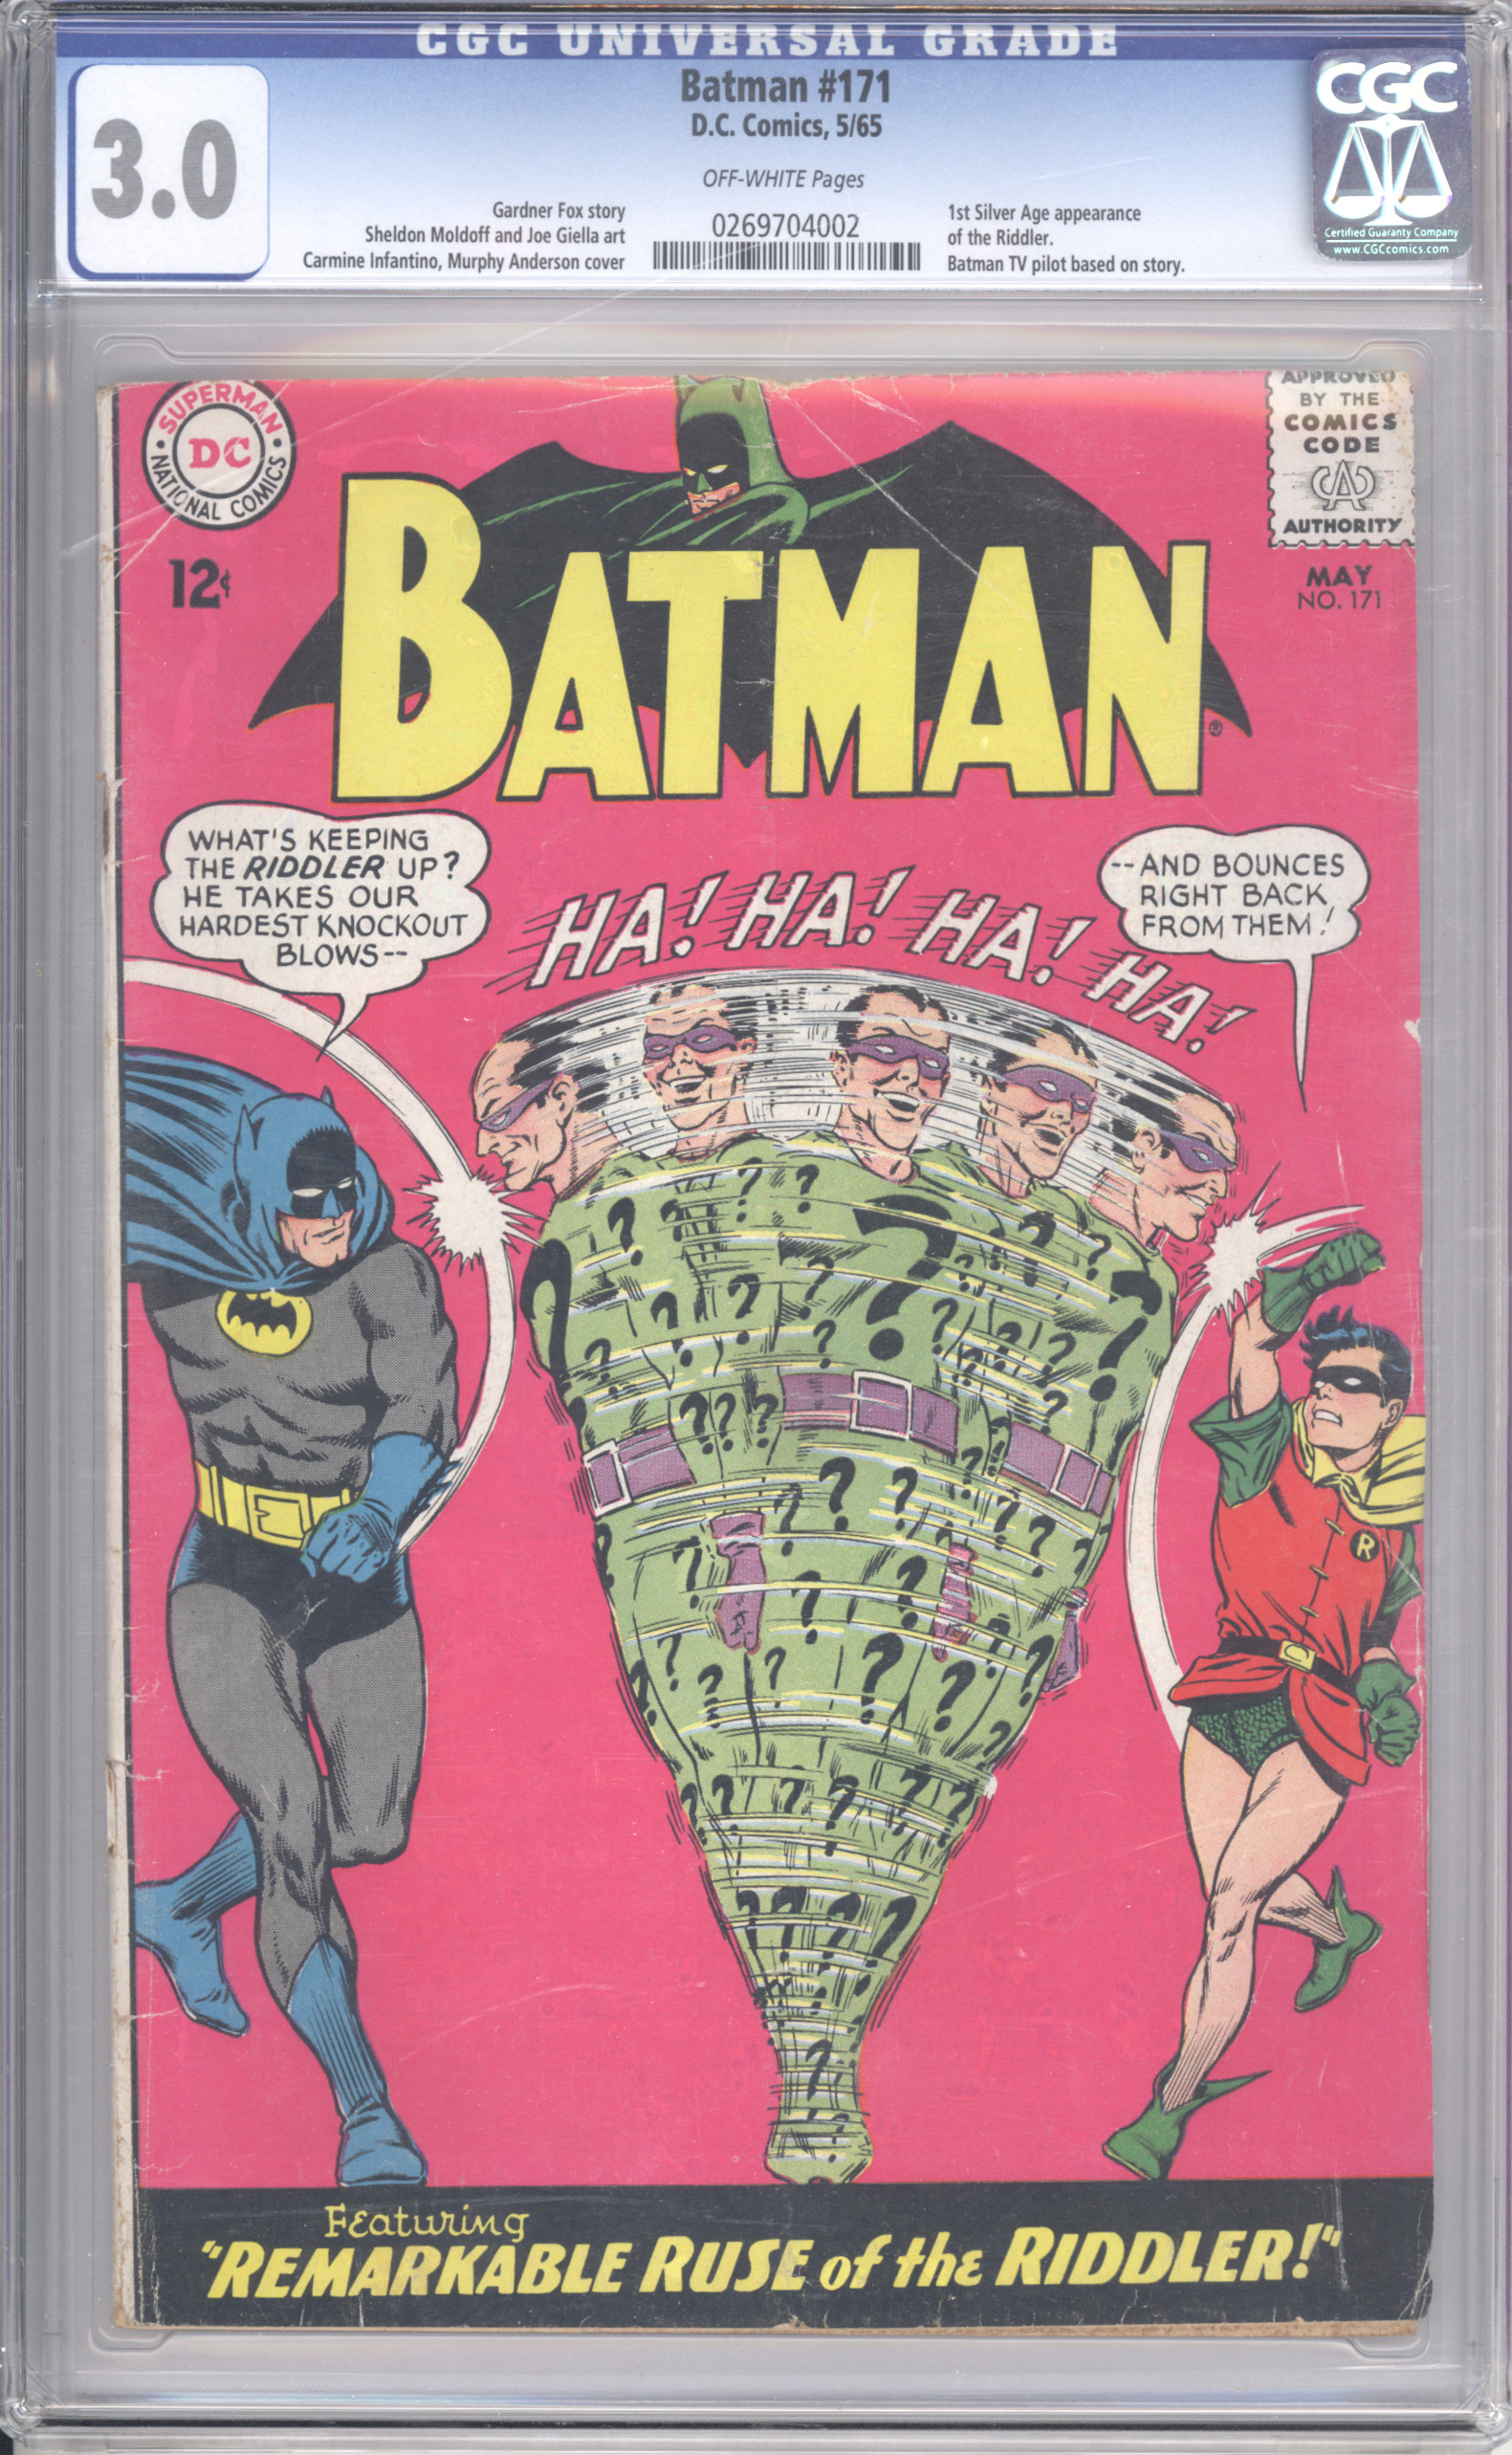 Batman #171 front